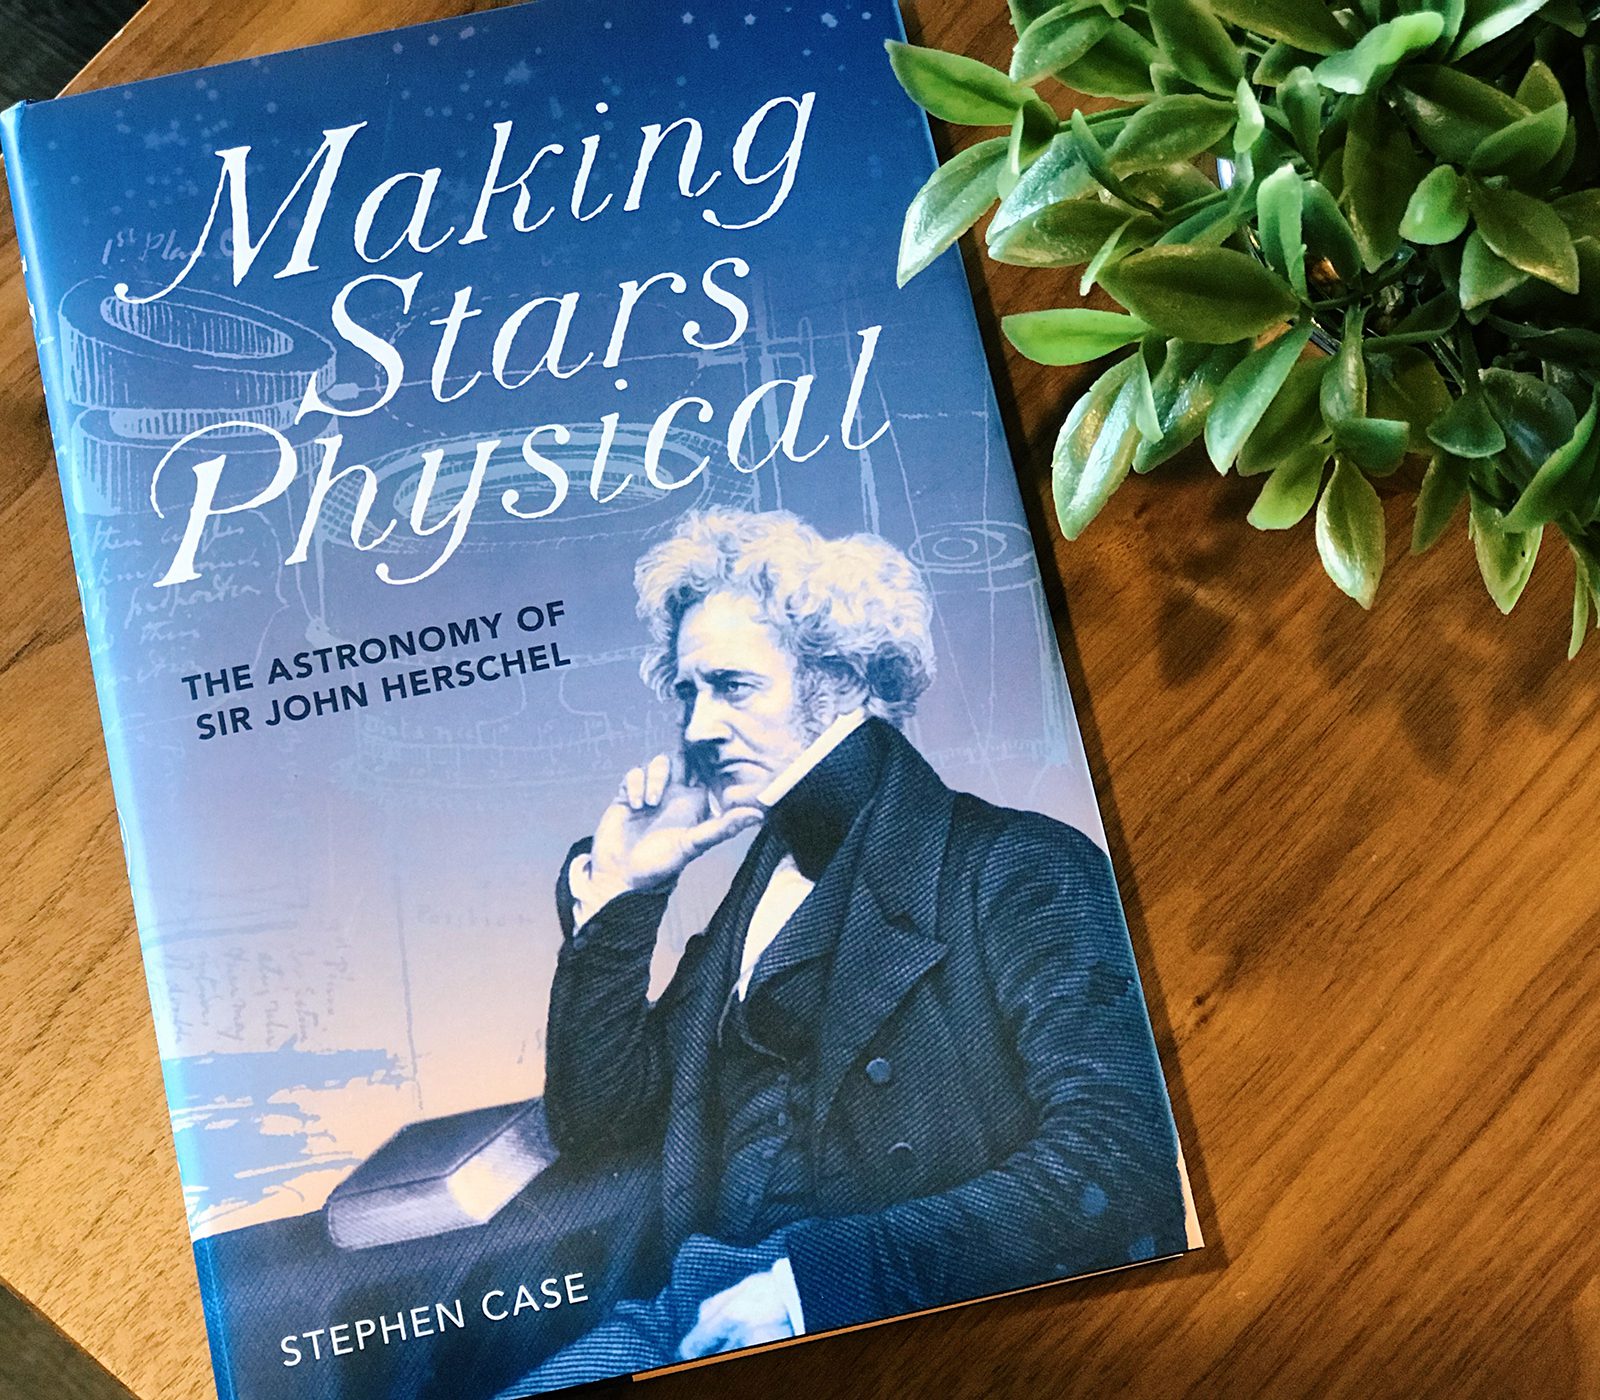 Olivet_Stephen Case_Making Stars Physical_Sir John Herschel_nonfiction book_Web.jpg